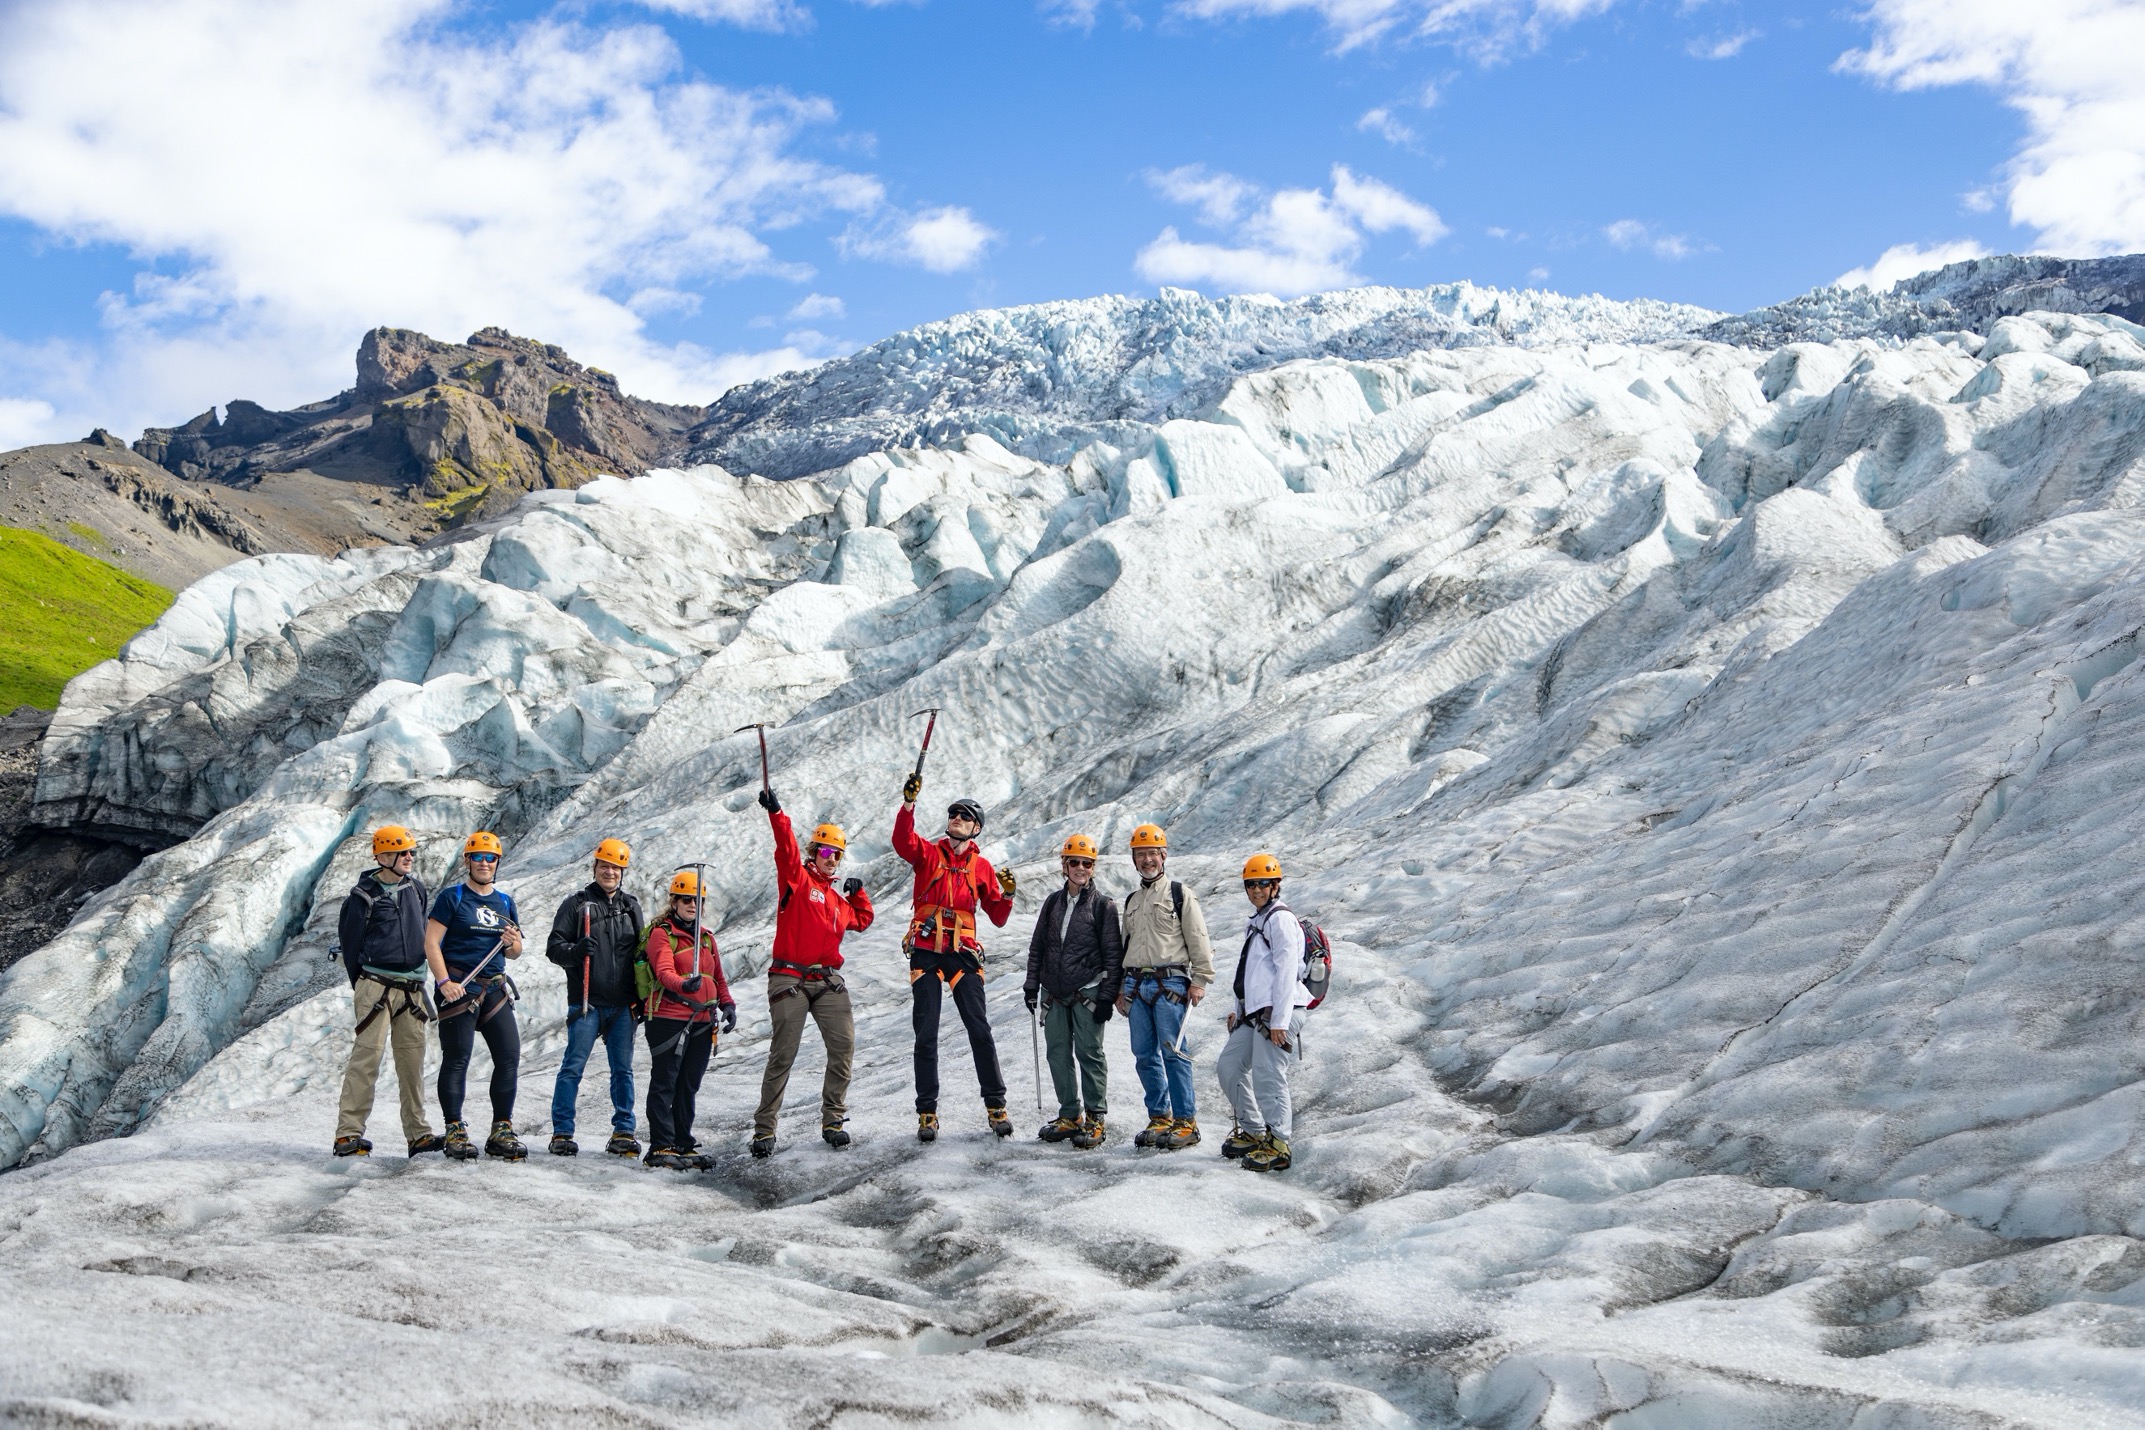 glacier trekkers cheering at camera